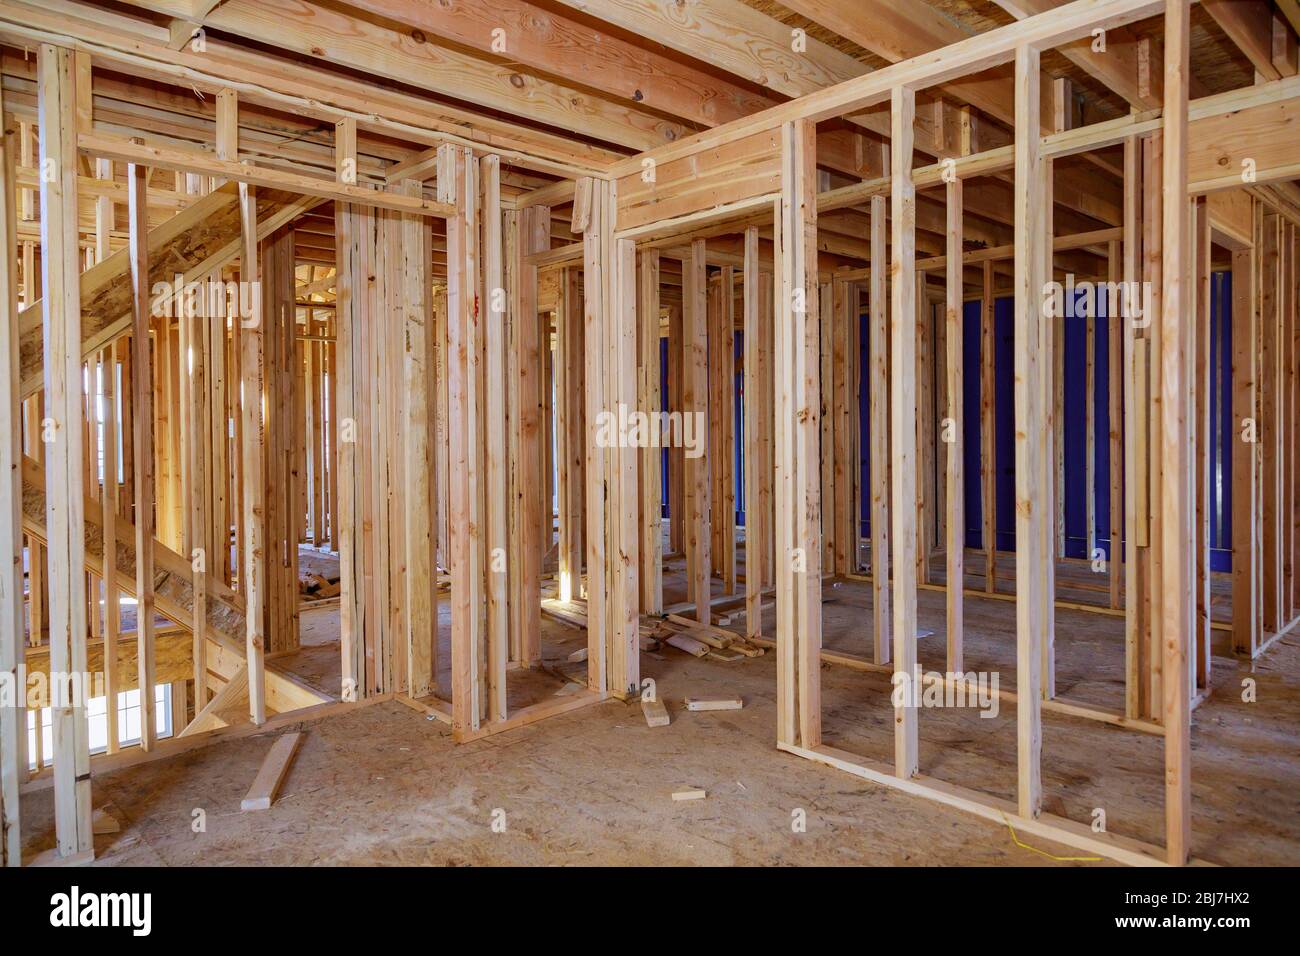 Casa de vigas de madera construcción casa marco interior residencial casa Foto de stock